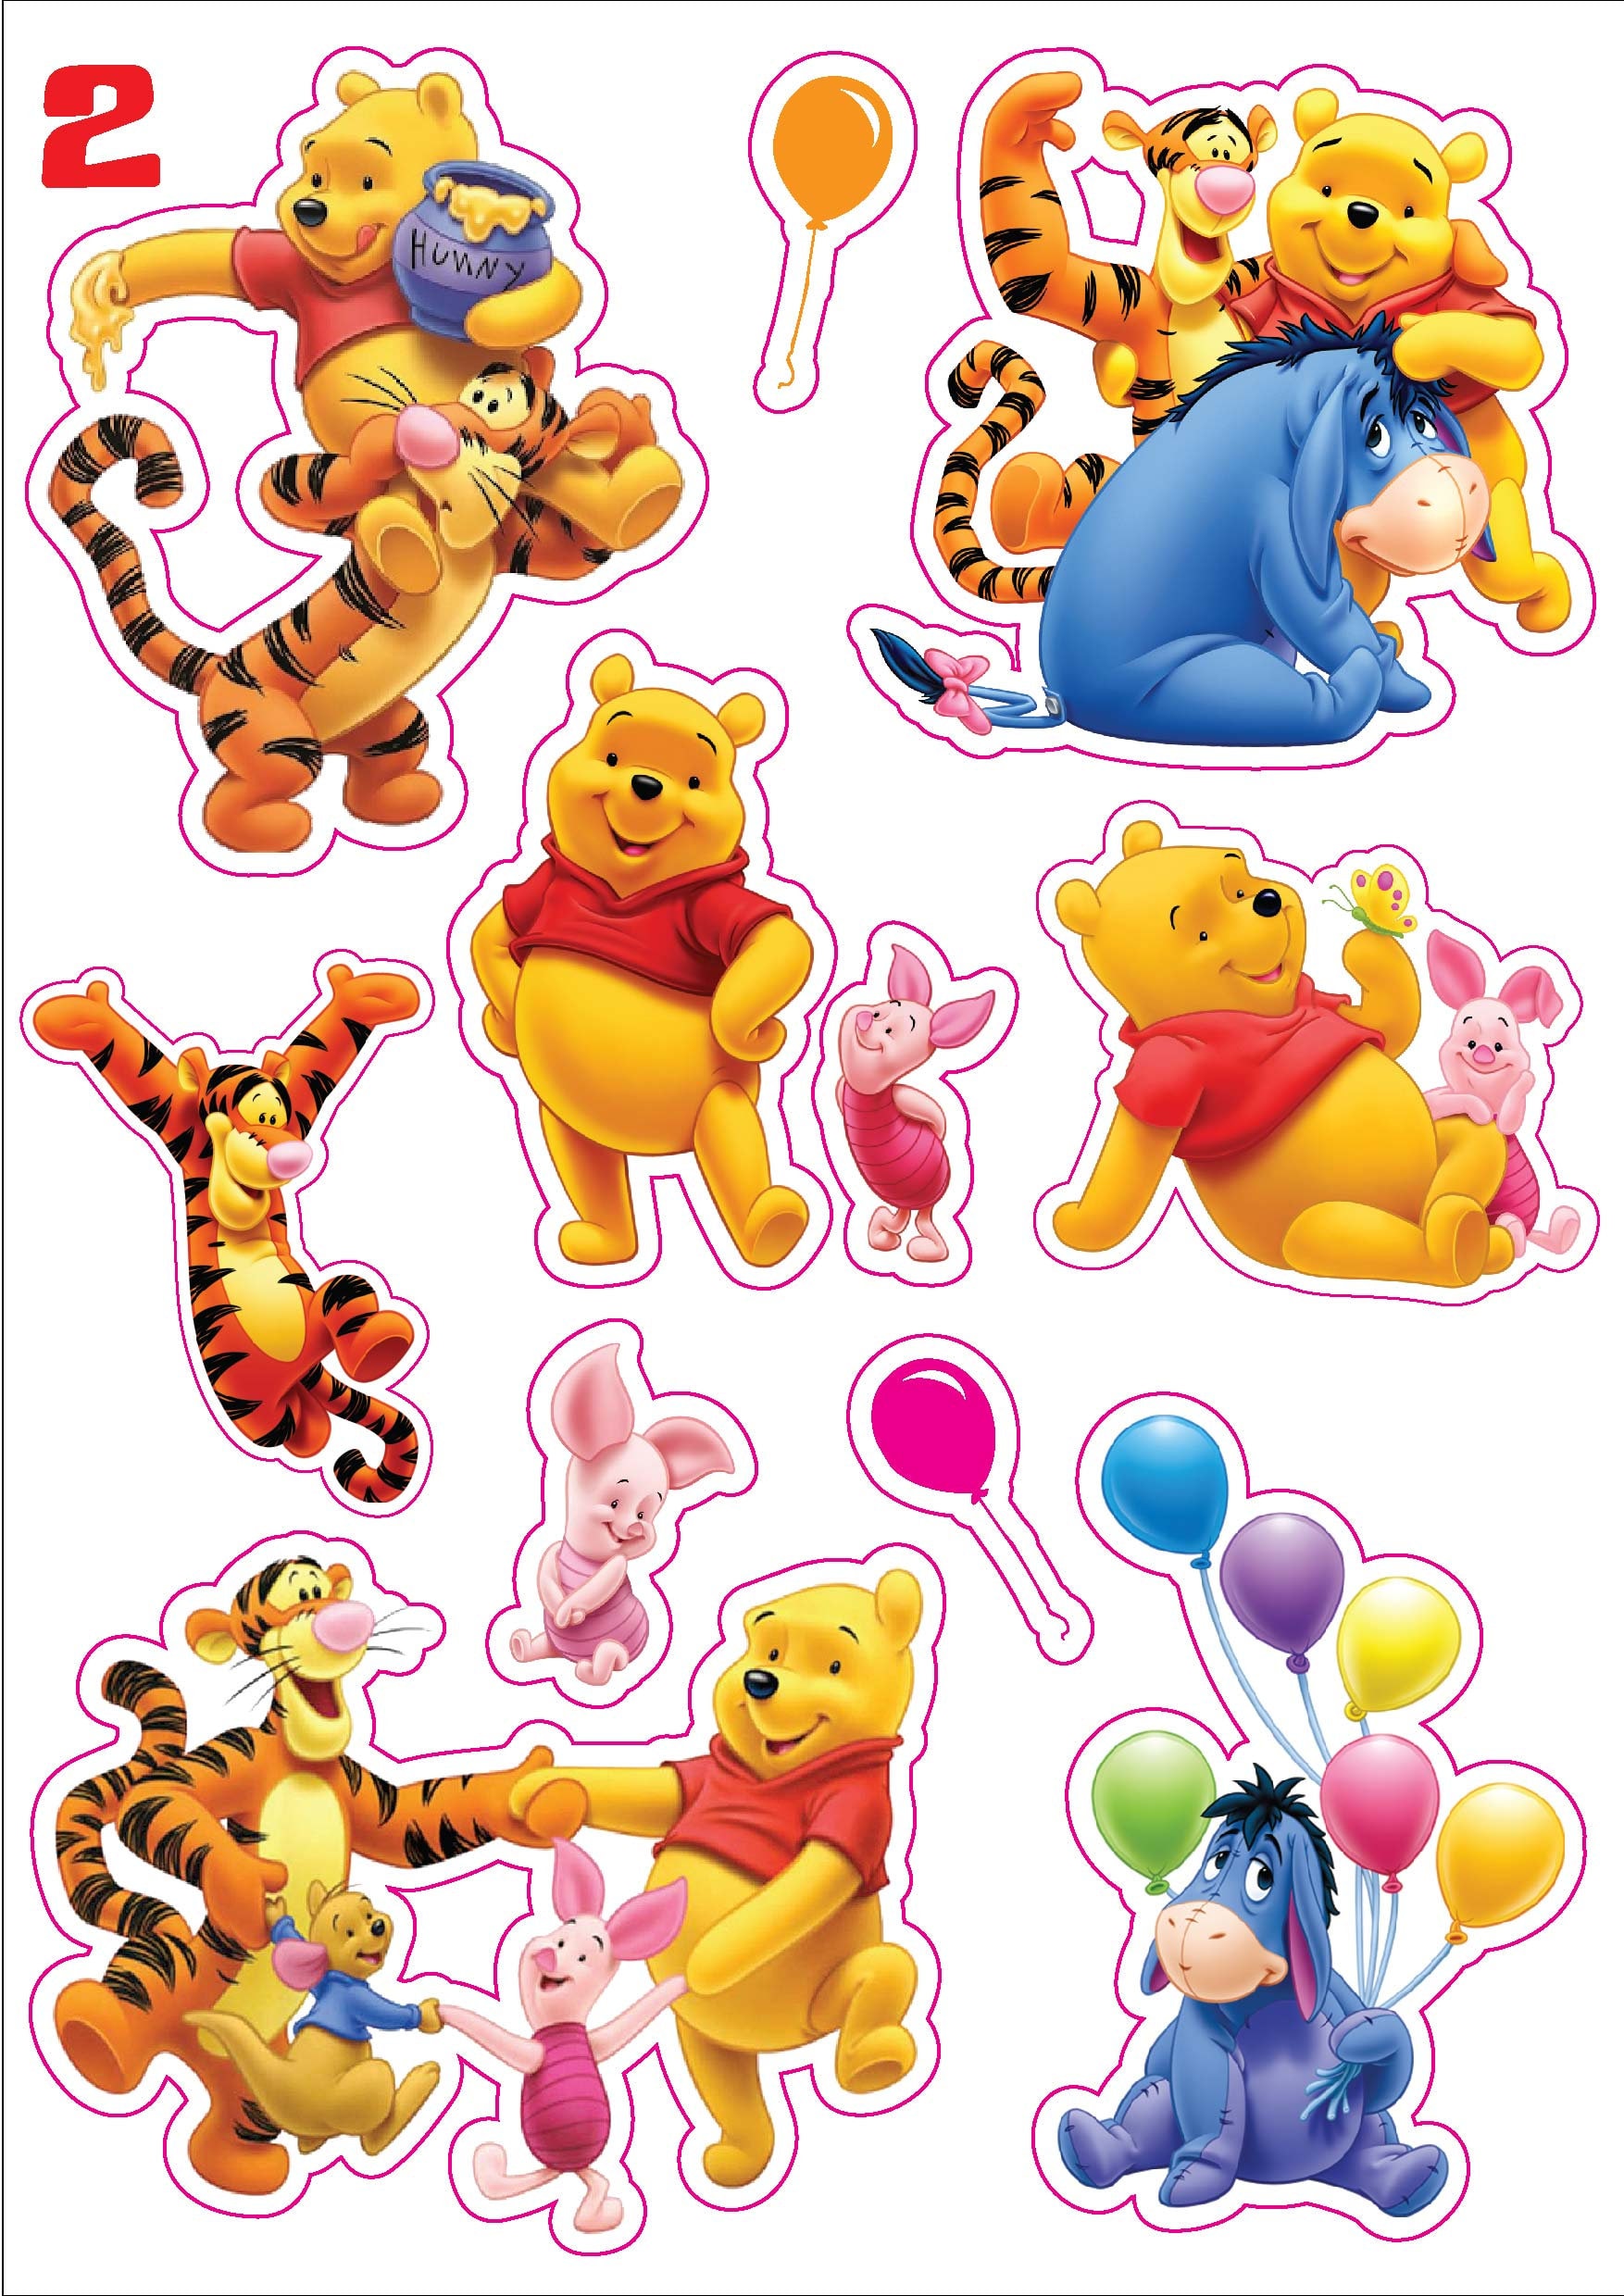 Winnie The Pooh Stickers, 50pcs PVC Waterproof Cute Disney Vinyl Decals  Stickers Piglet Eeyore Pooh Bear Tigger Stickers Gift for Teen Boy and  Girls DIY Laptop …